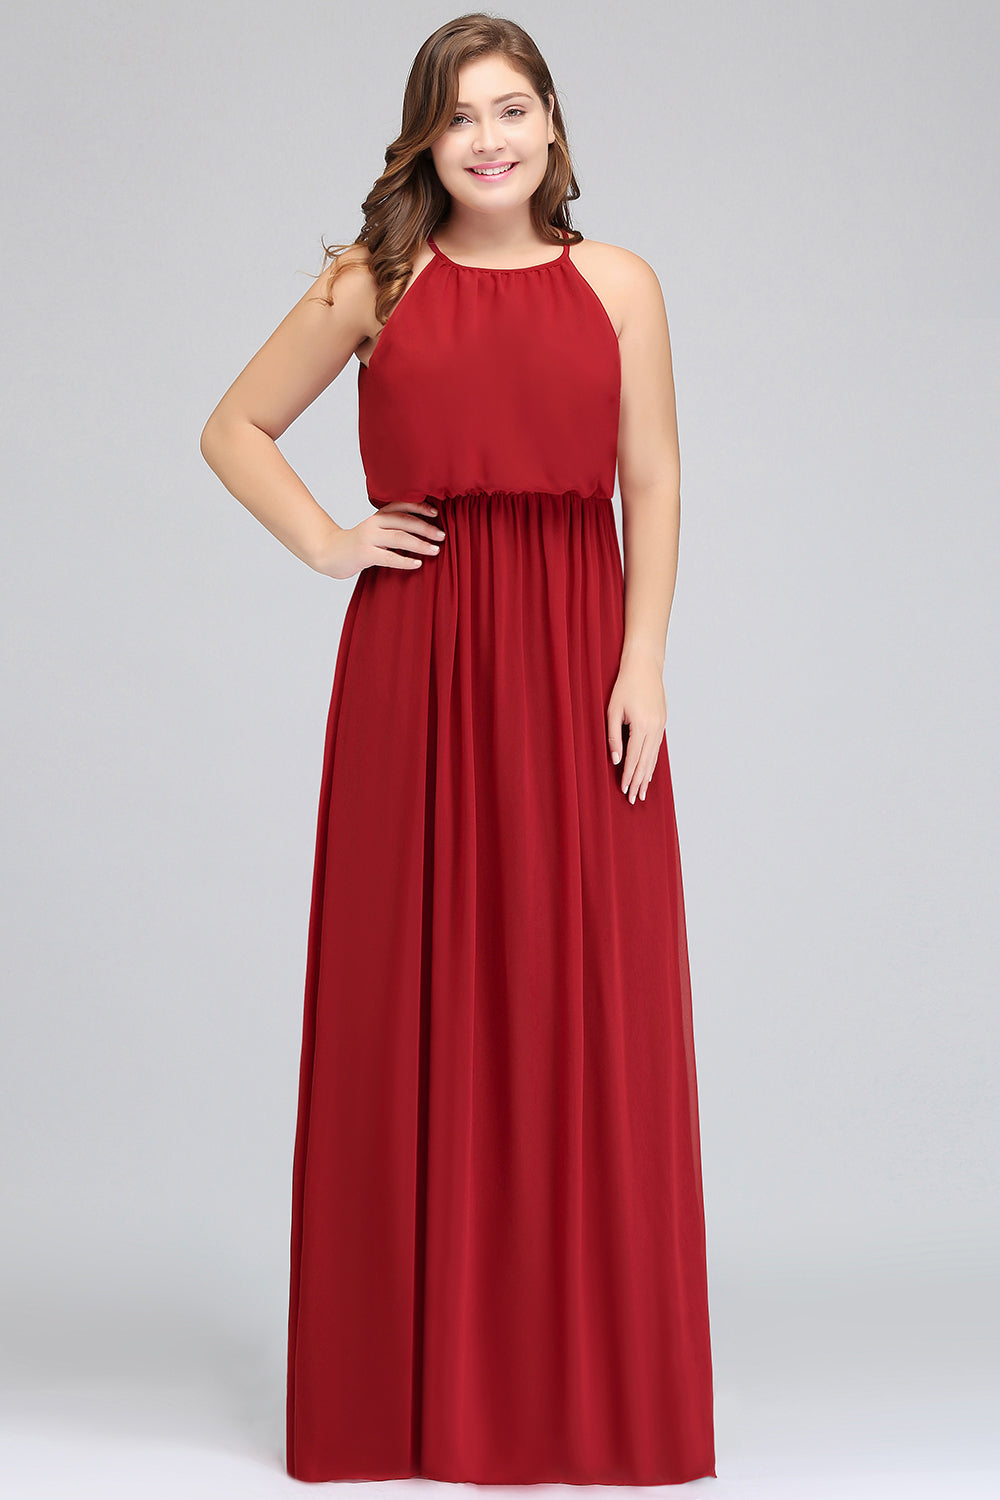 Plus Size Elegant Halter Red Chiffon Long Bridesmaid Dresses with Ruffle